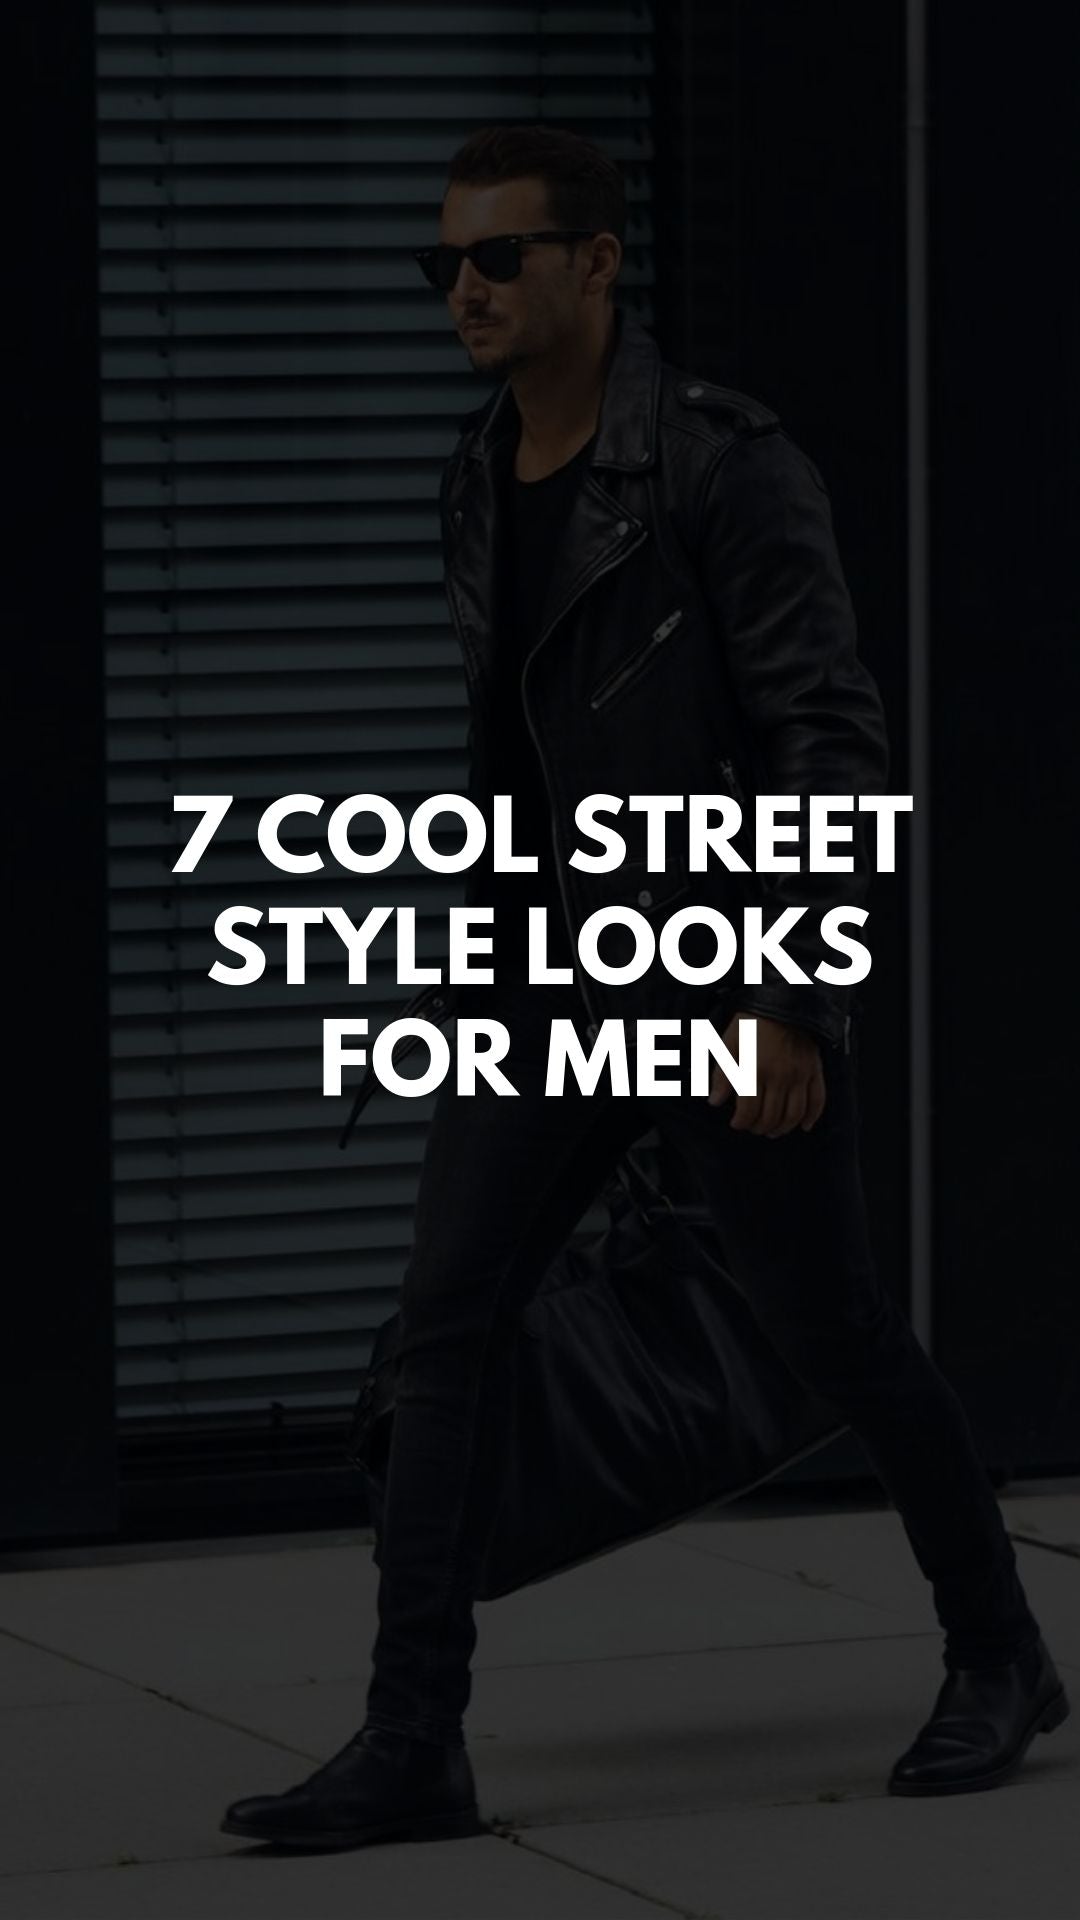 7 COOL STREET STYLE LOOKS FOR MEN